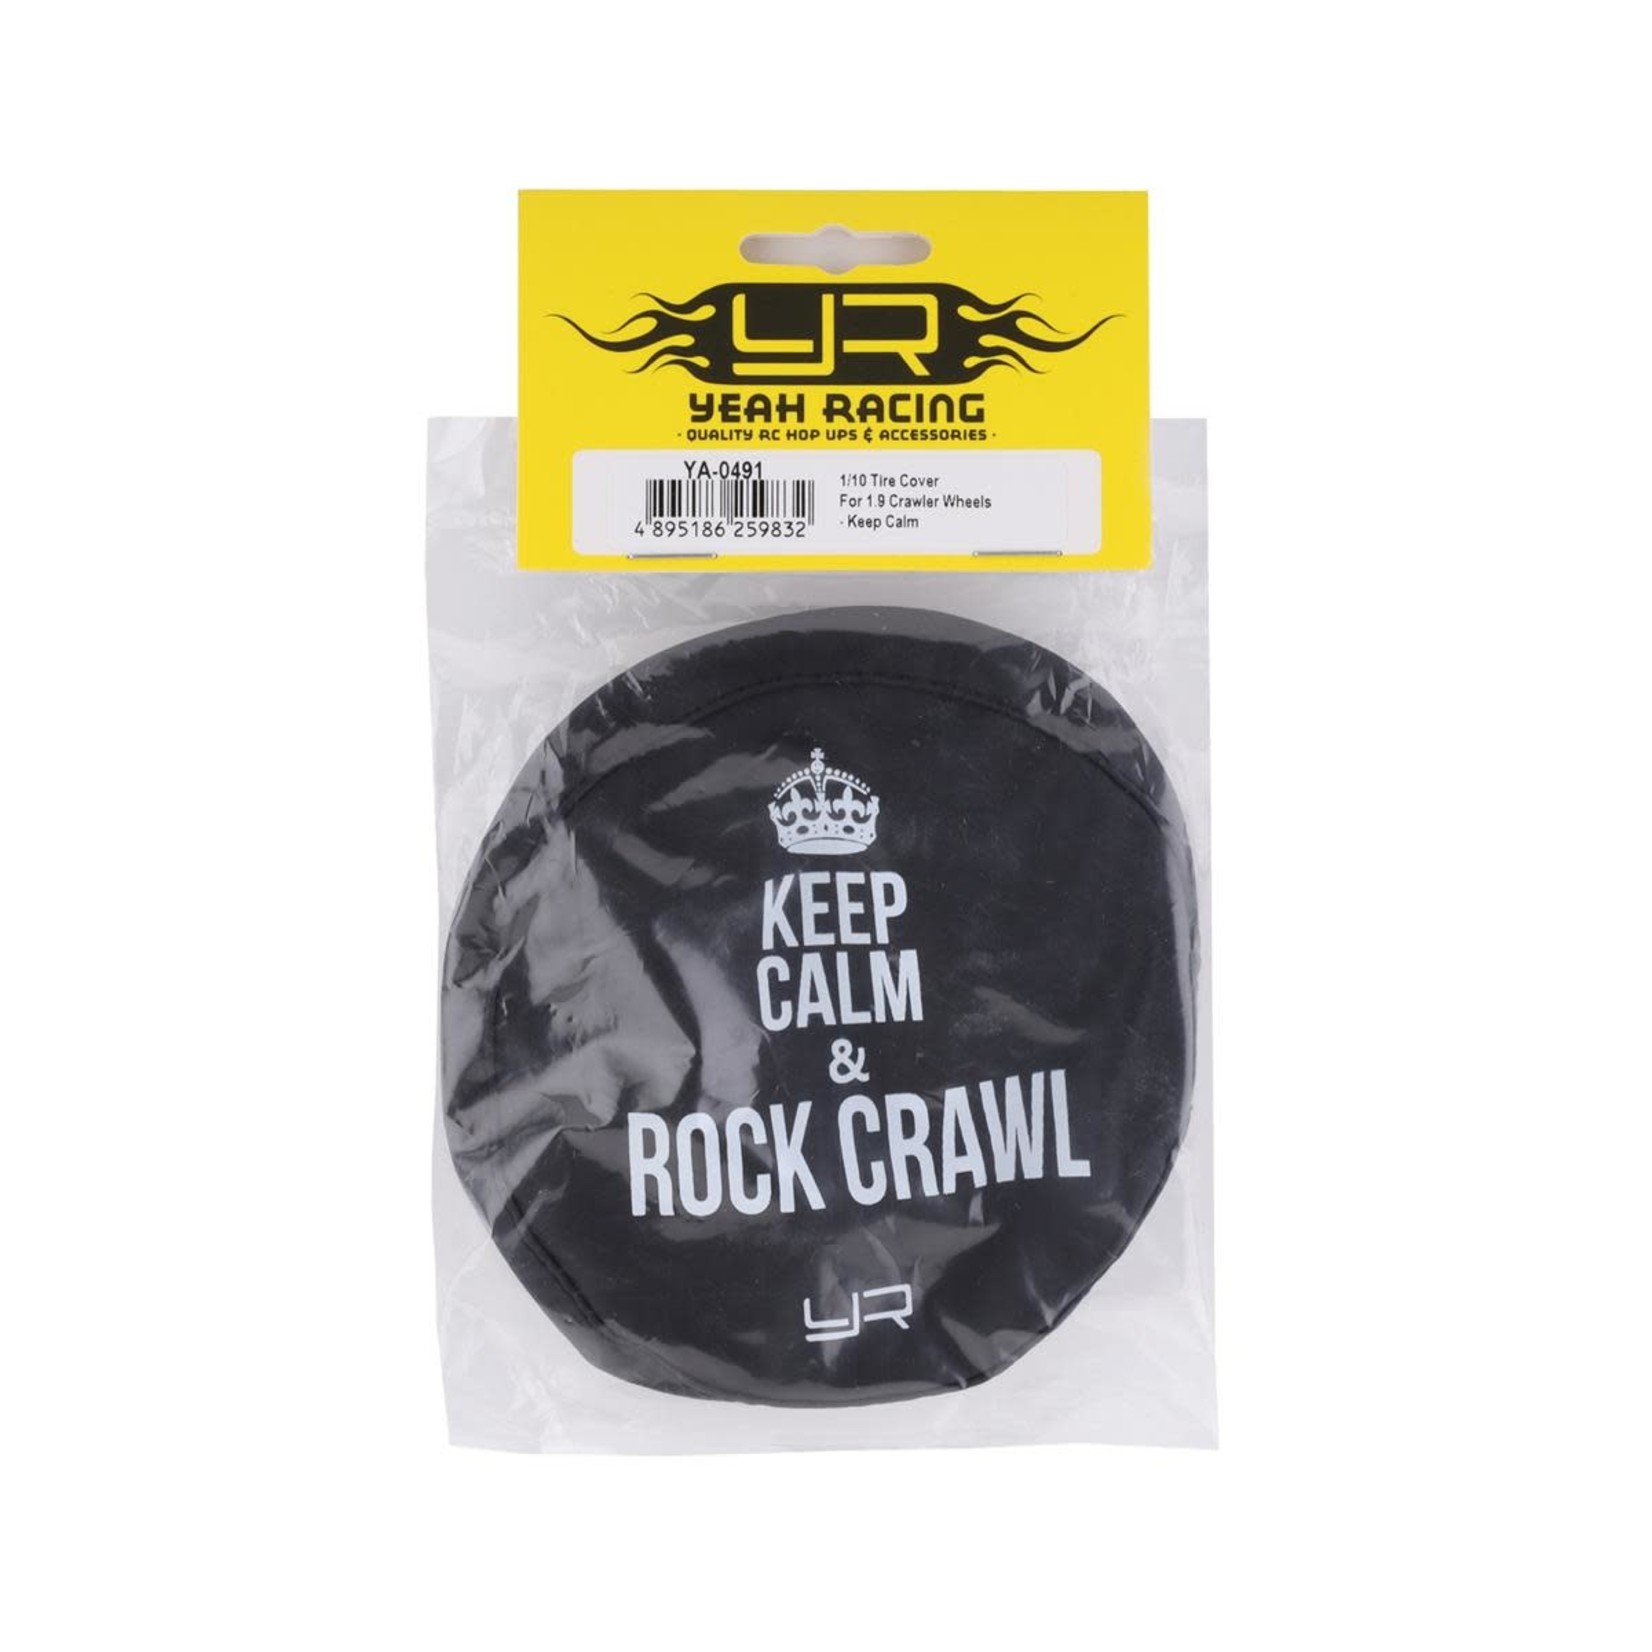 Yeah Racing Yeah Racing 1.9" Keep Calm & Rock Crawl Tire Cover #YA-0491